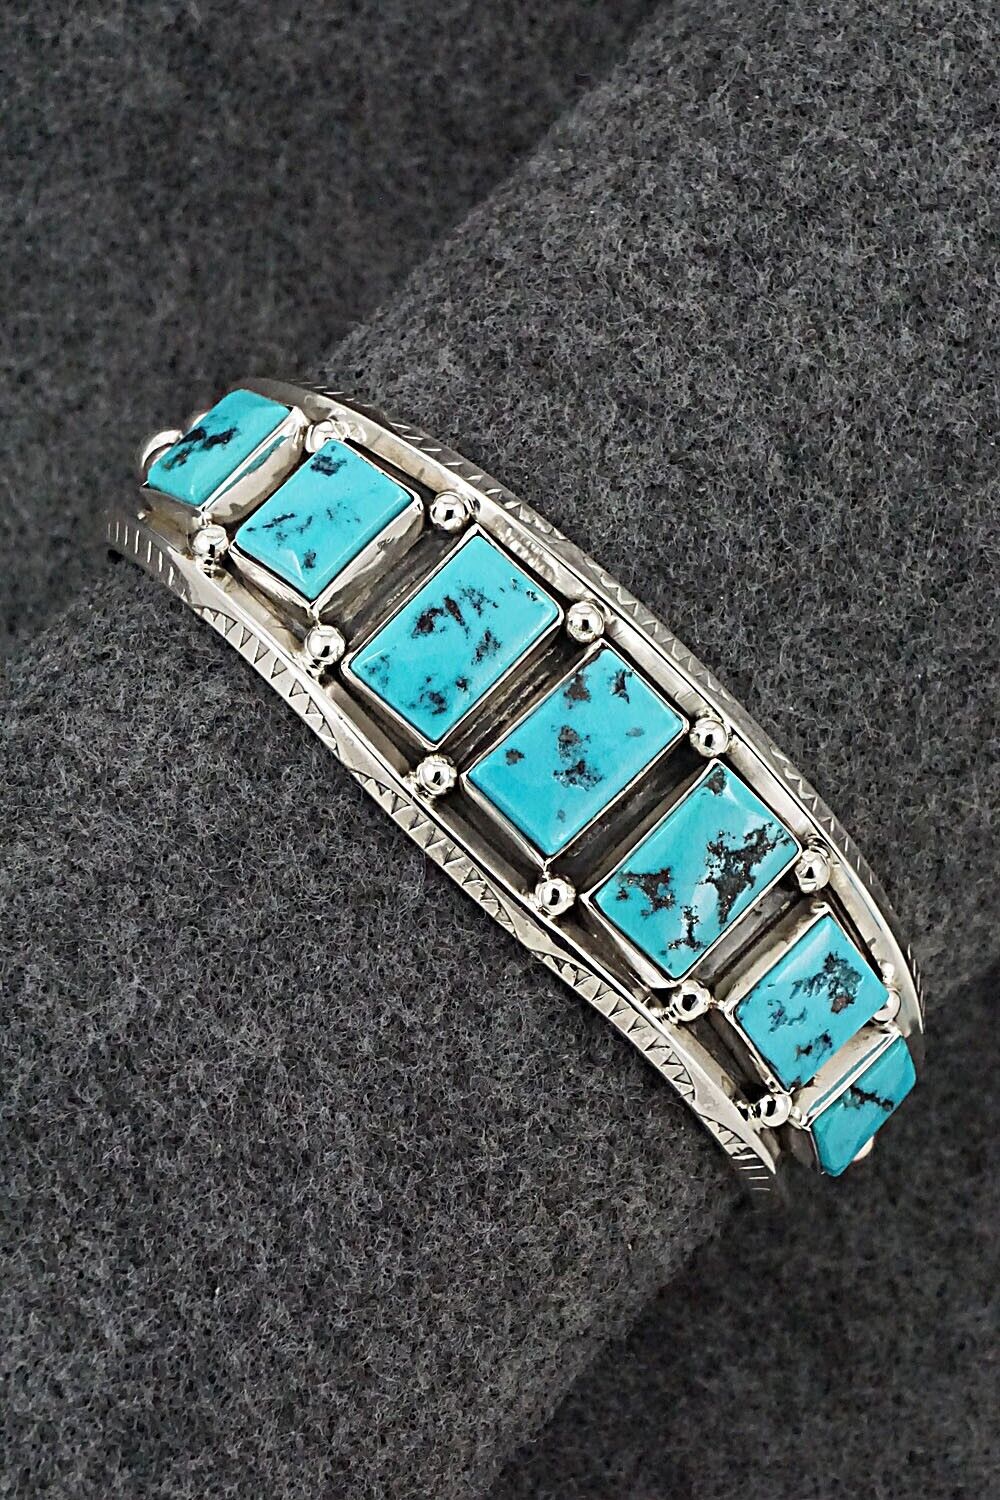 Turquoise & Sterling Silver Bracelet - Davey Morgan